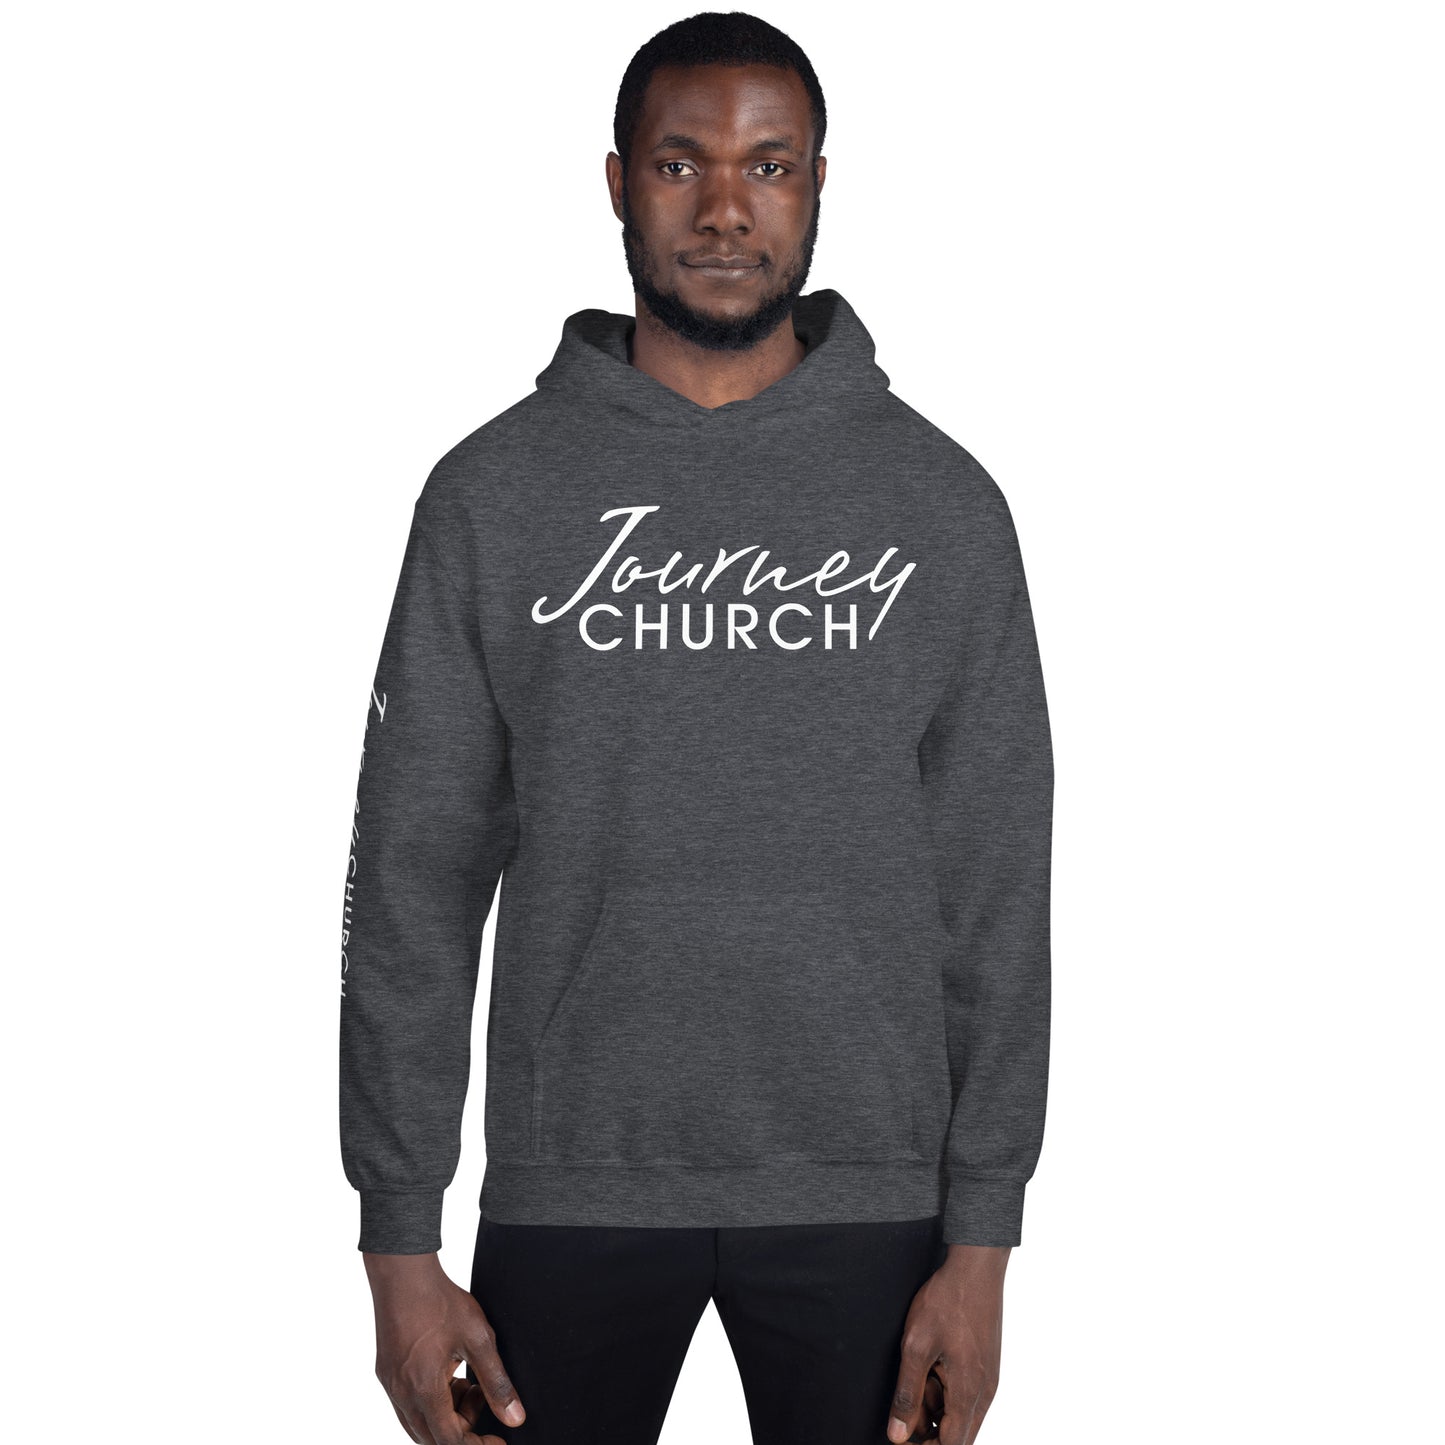 Journey Church - Unisex Hoodie w/ Sleeve Print